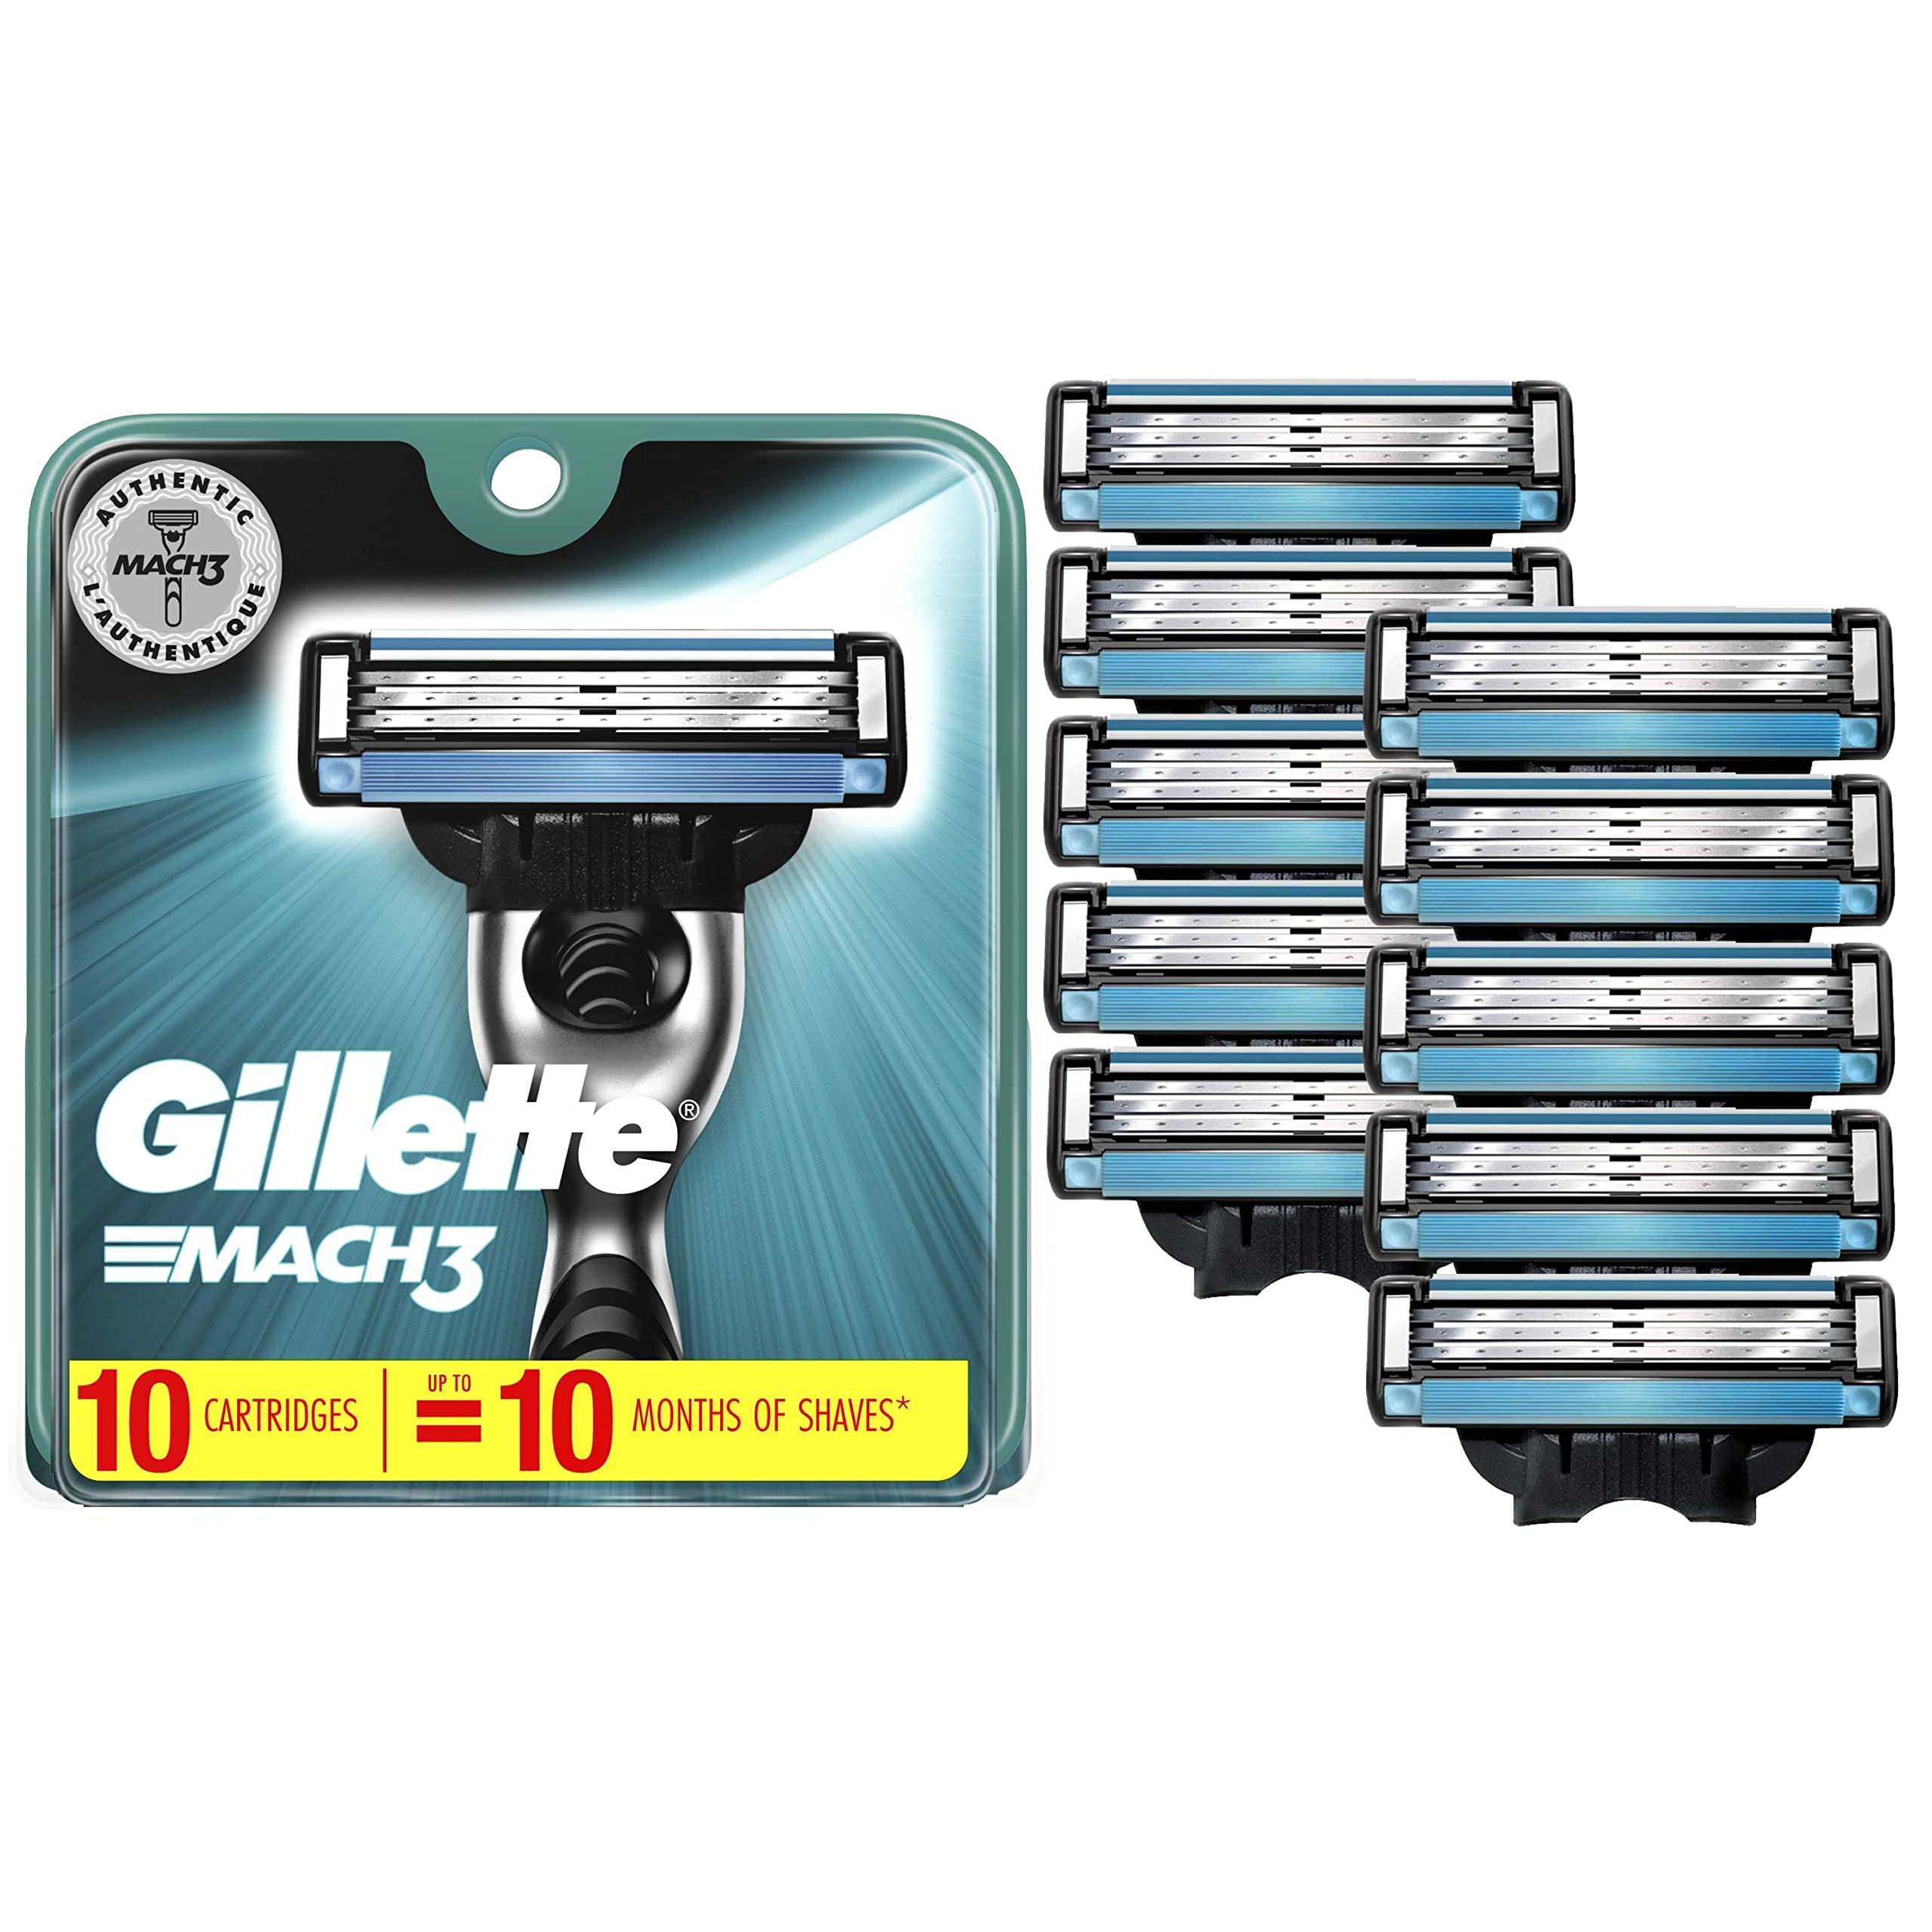 Gillette Mach3 Mens Razor Blade Refills, 10 Count